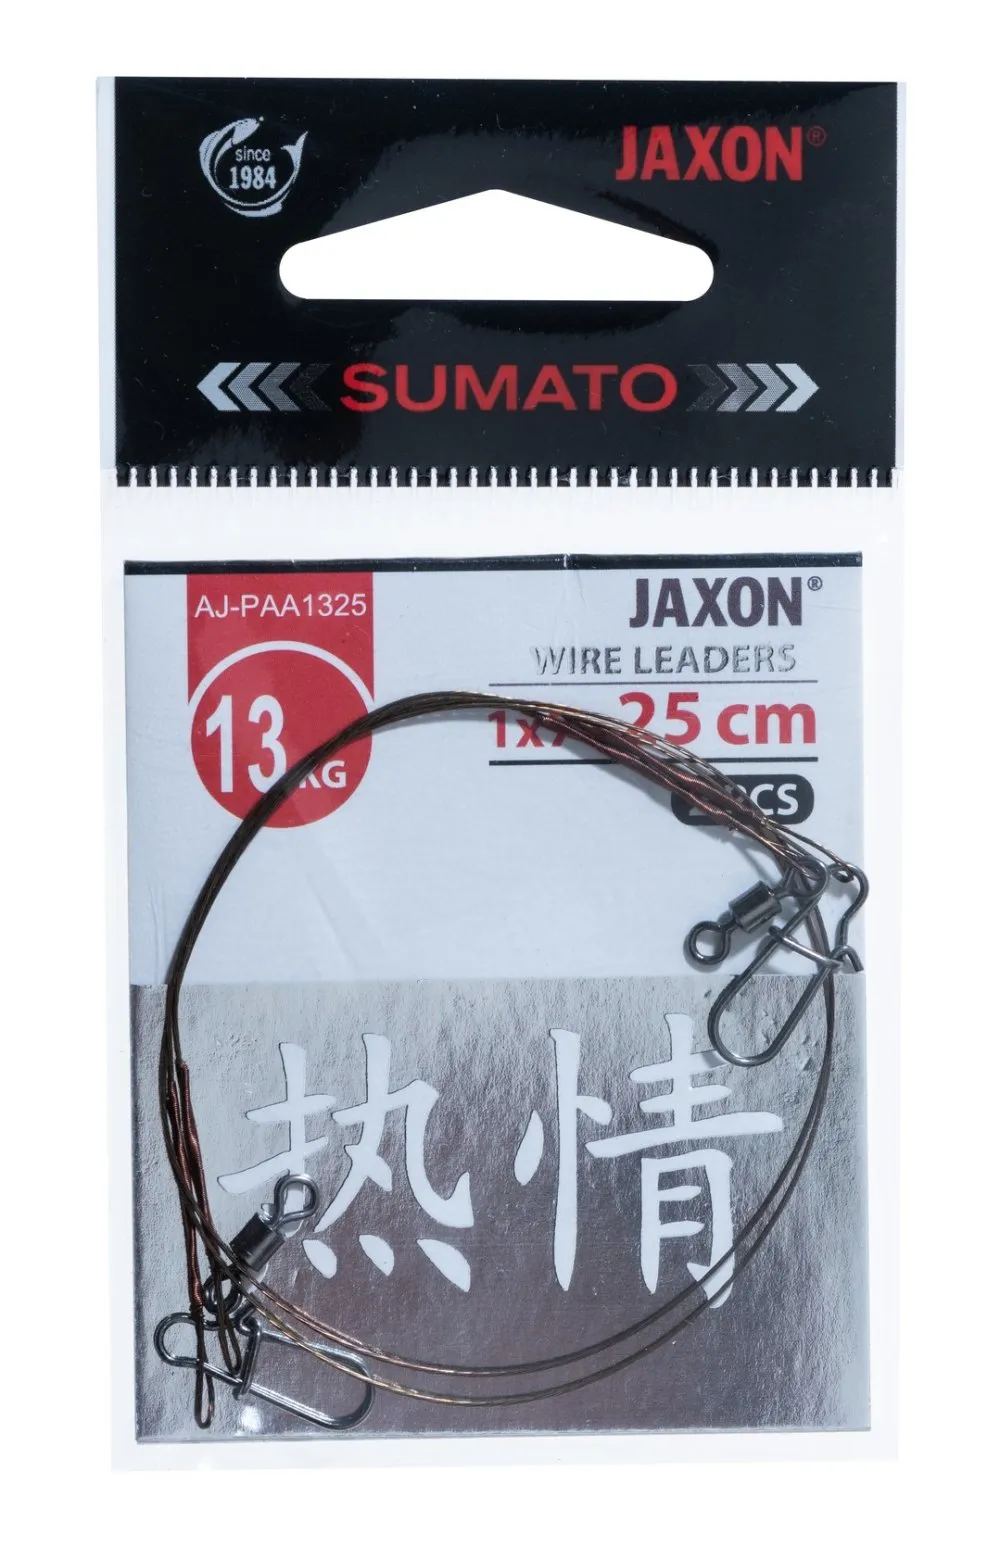 SNECI - Horgász webshop és horgászbolt - JAXON SUMATO WIRE LEADERS 6kg 30cm